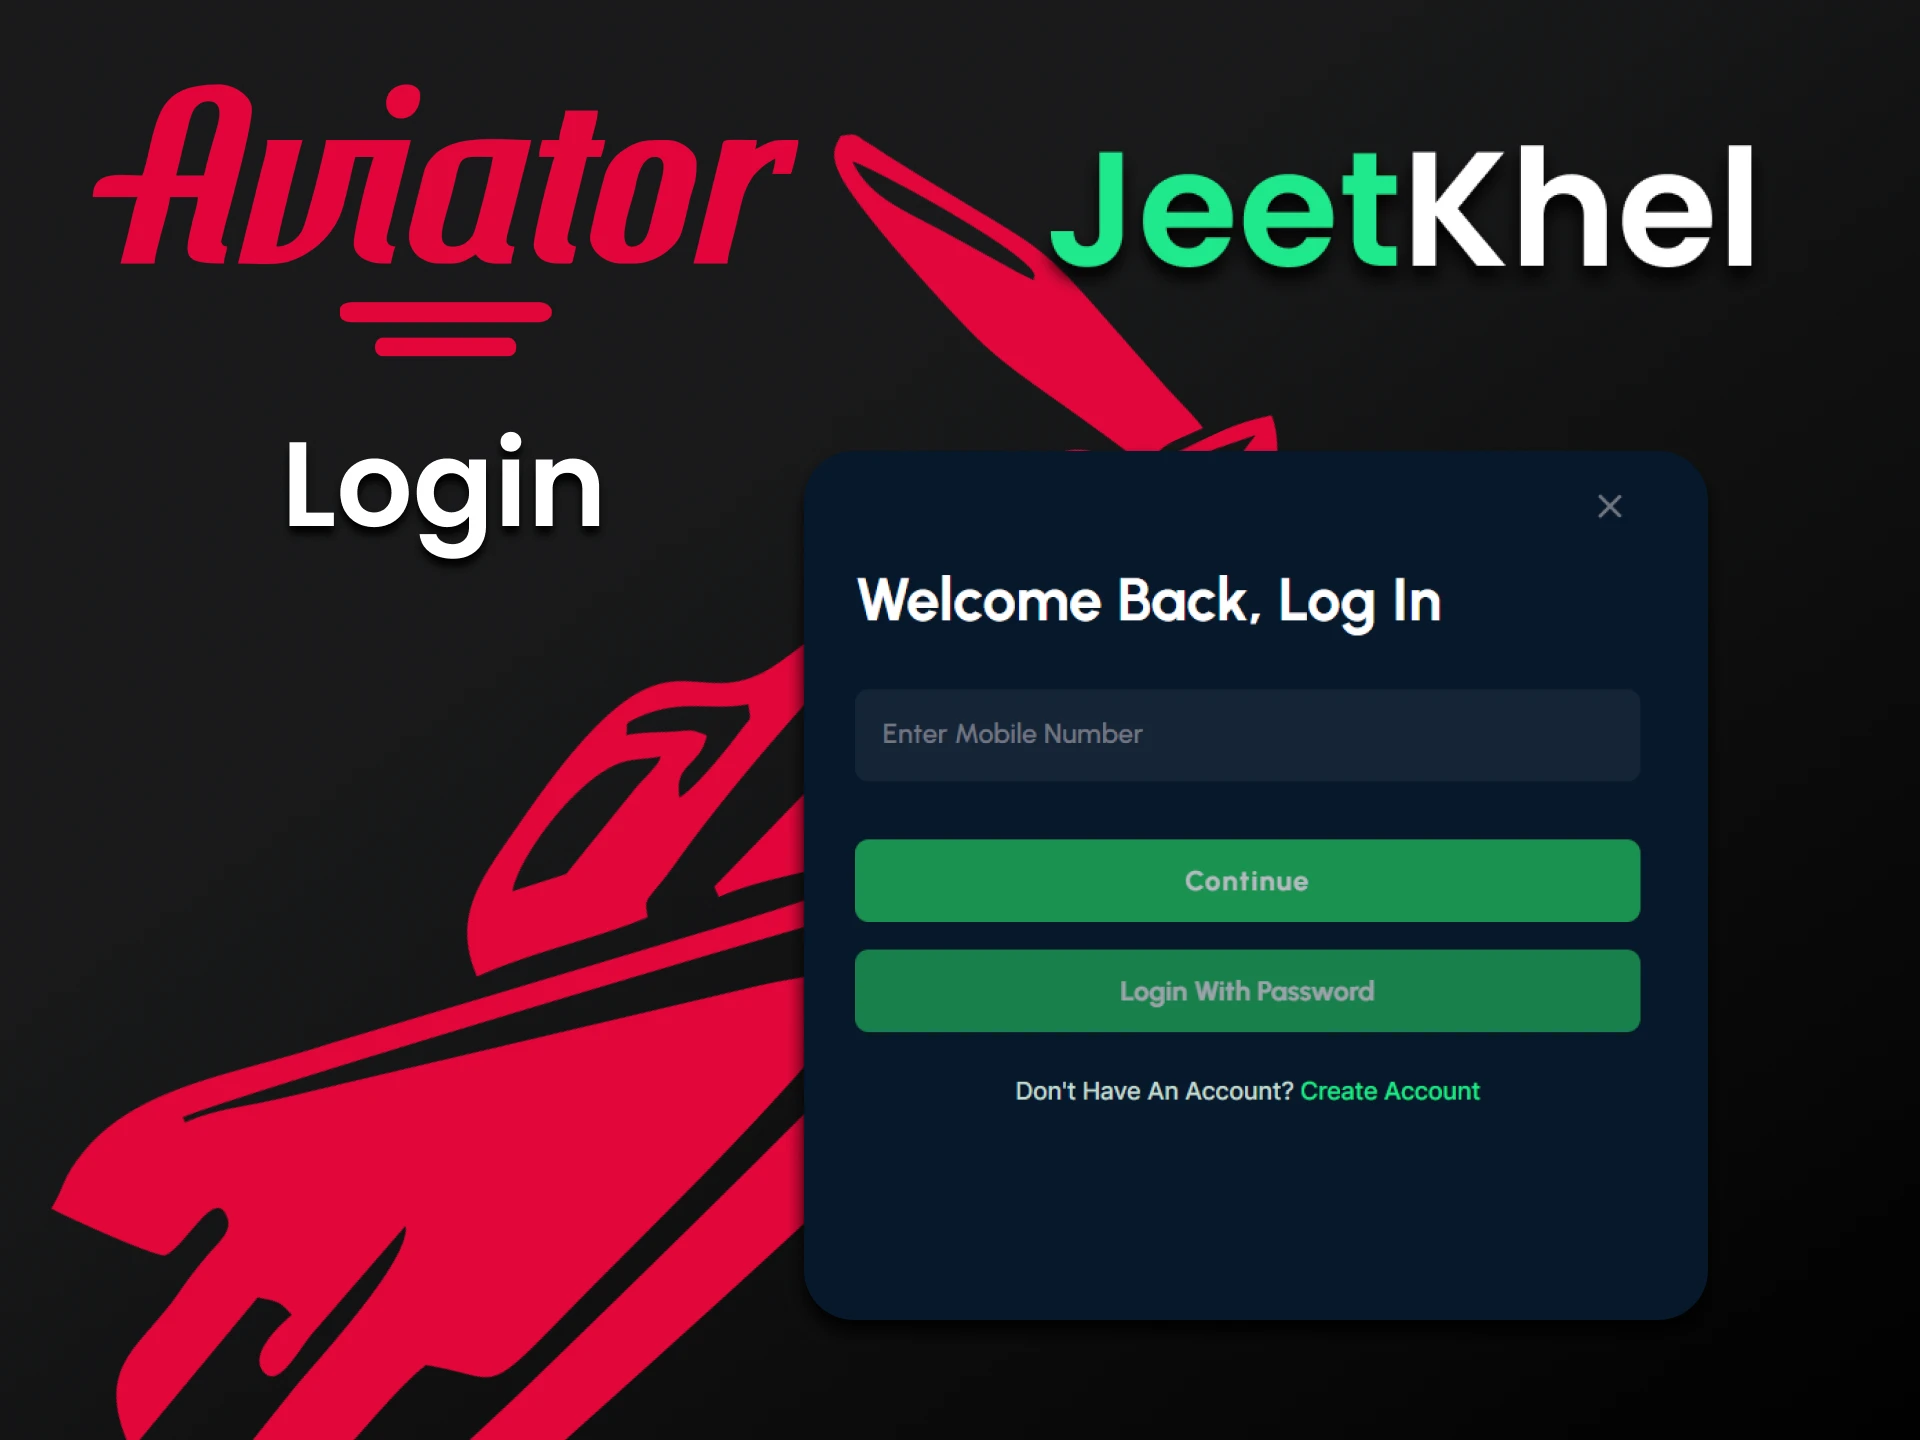 Login to JeetKhel account and start playing Aviator.